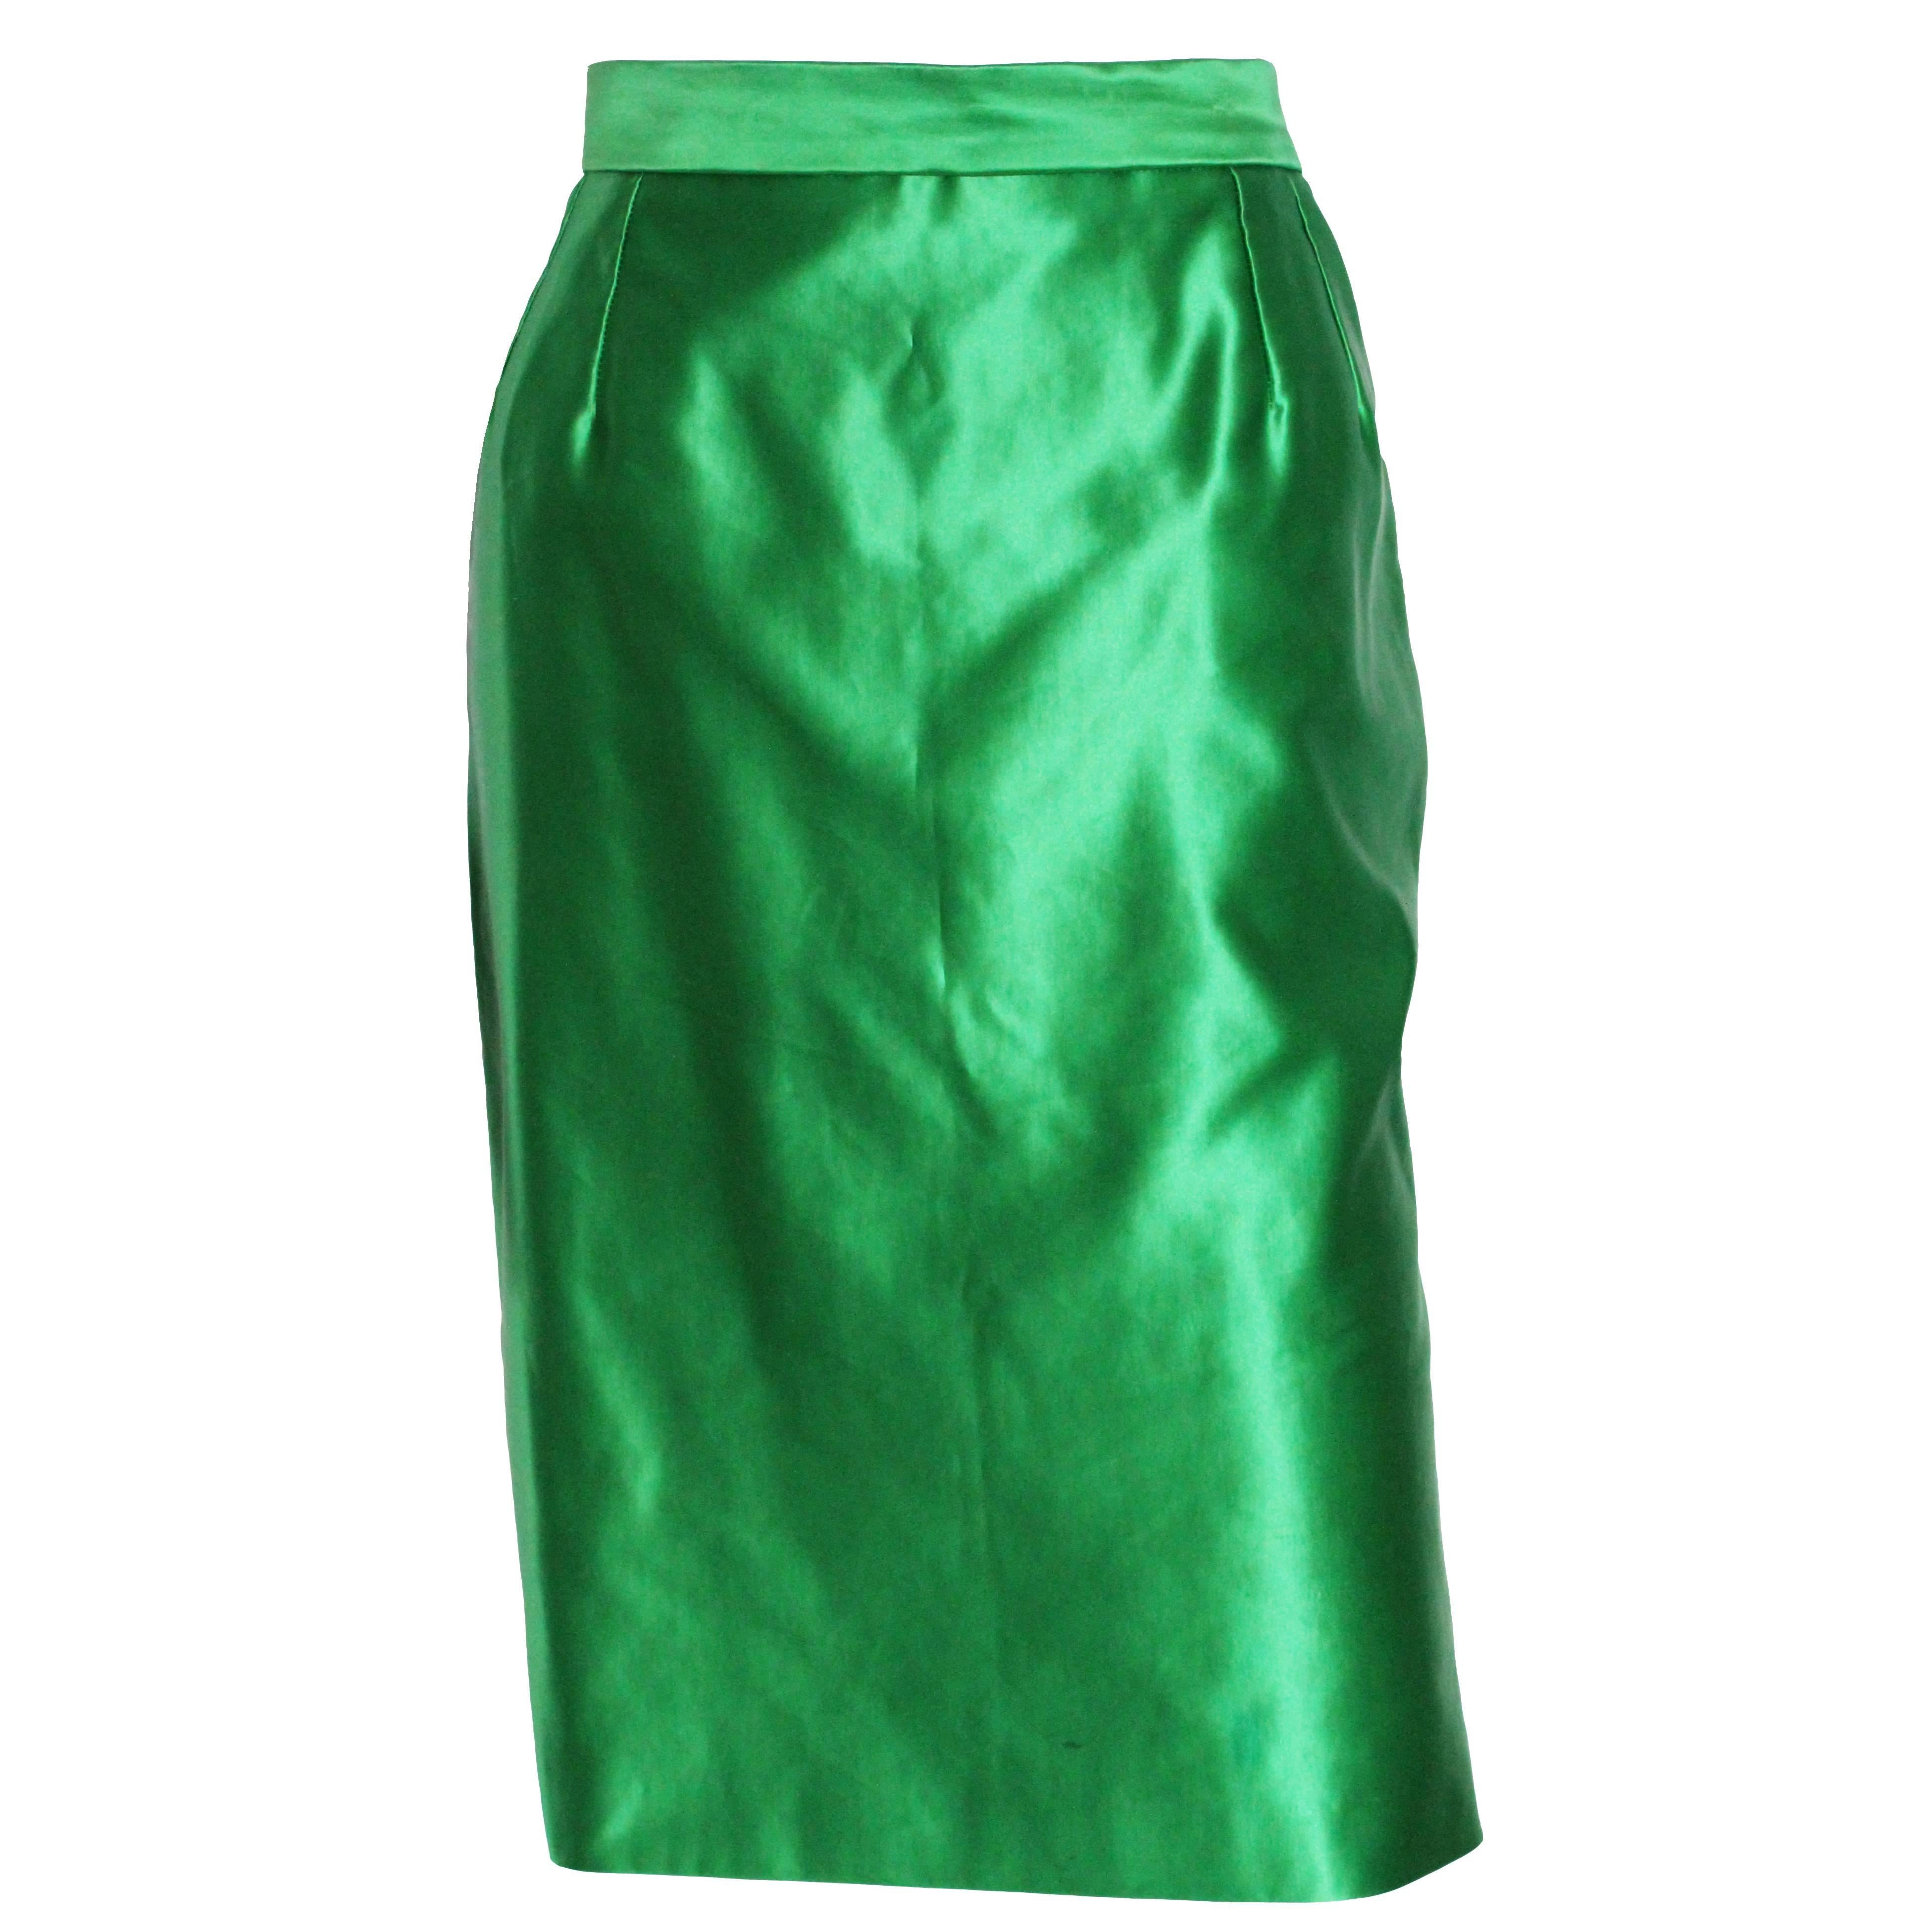 Yves Saint Laurent Variation Cotton and Silk mix Skirt